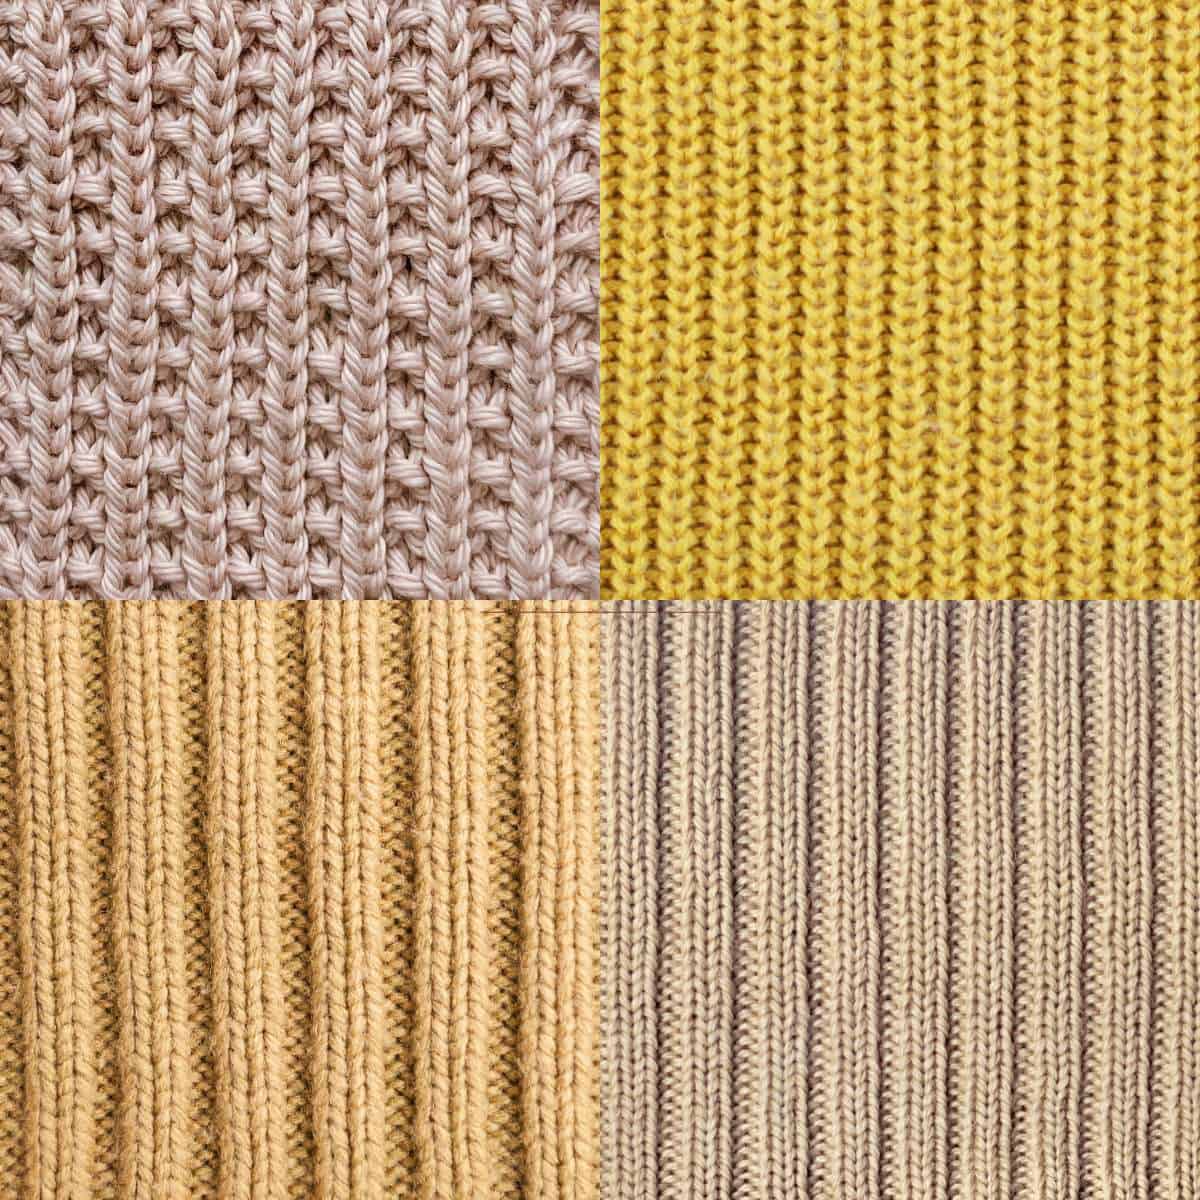 How To Knit Rib Stitch Patterns (1x1 and 2x2 ribbing)